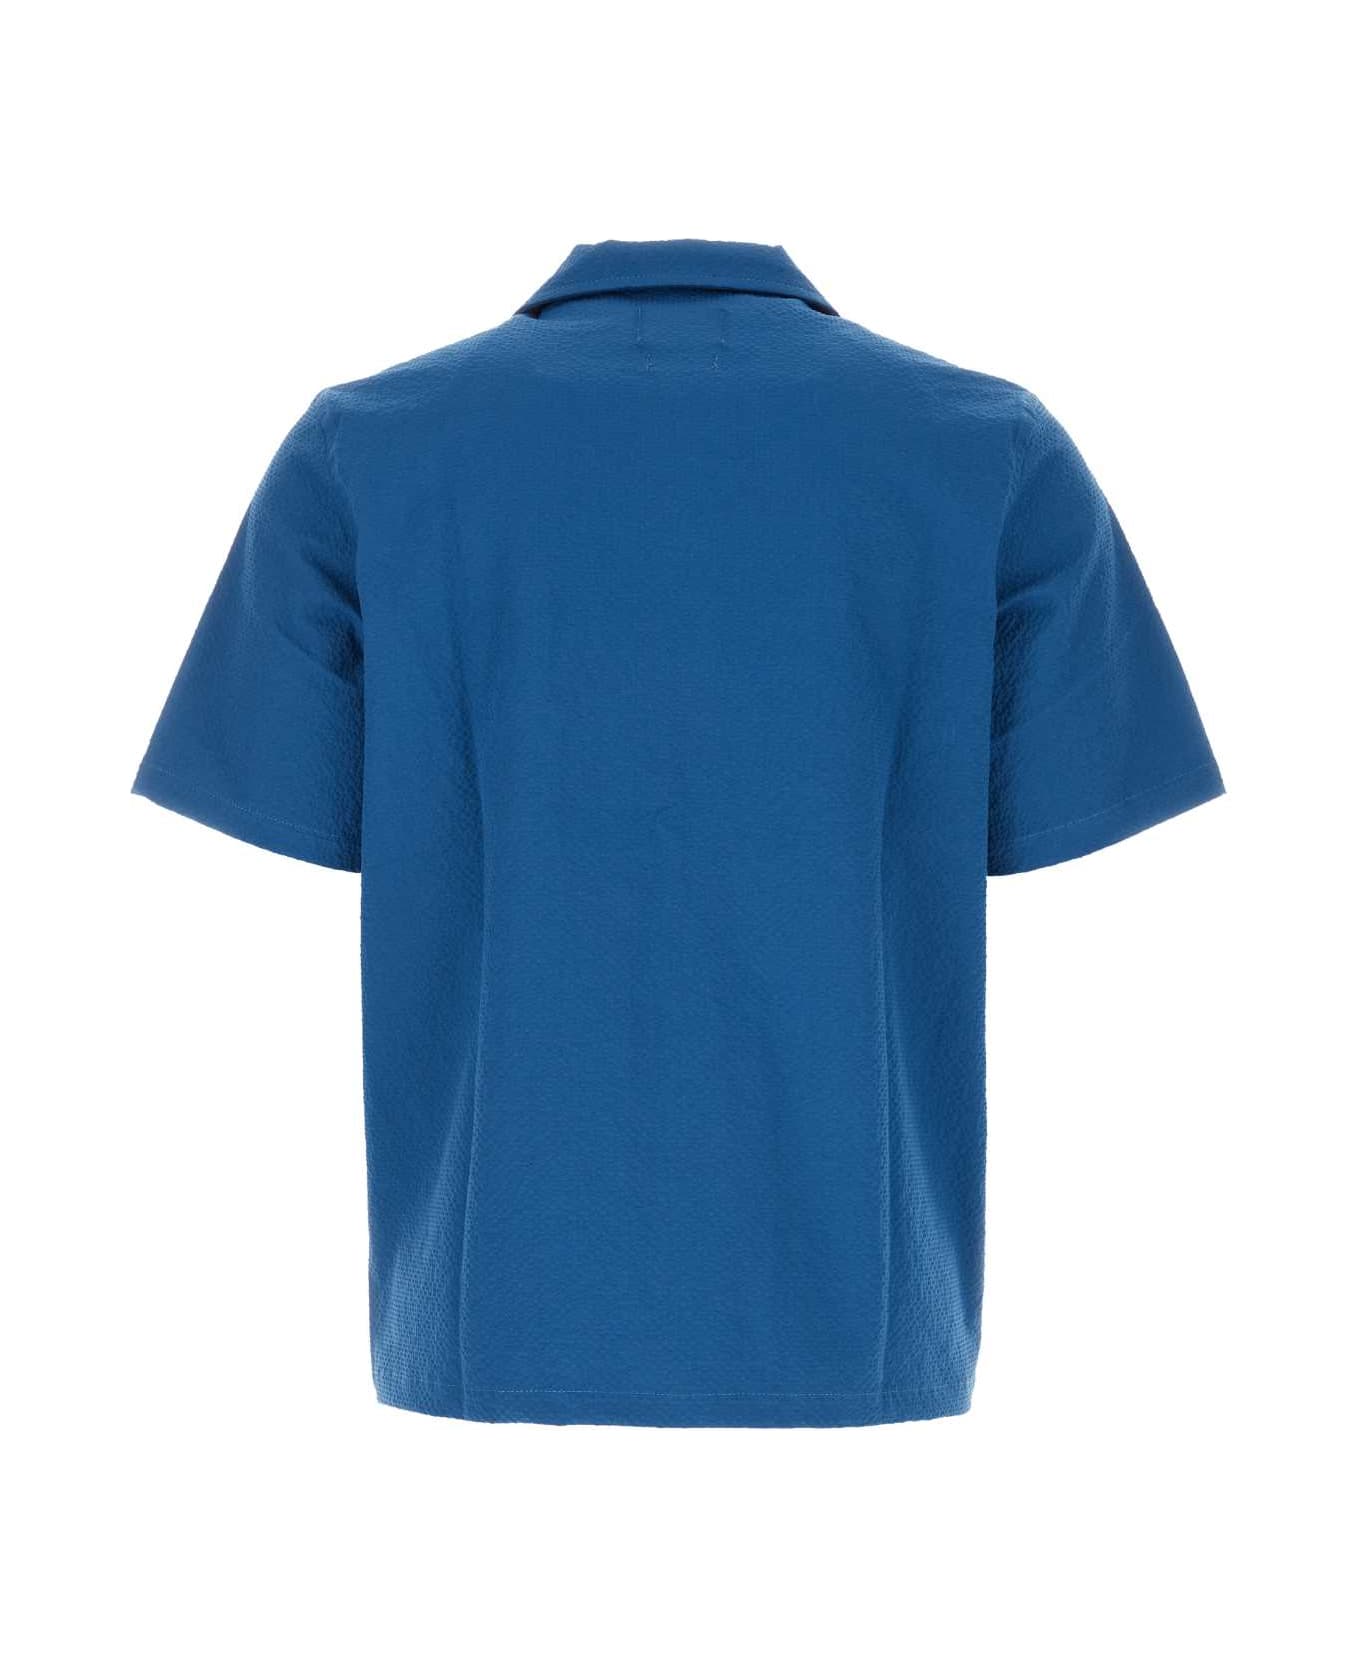 Howlin Air Force Blue Stretch Cotton Cocktail Shirt - PACIFIC